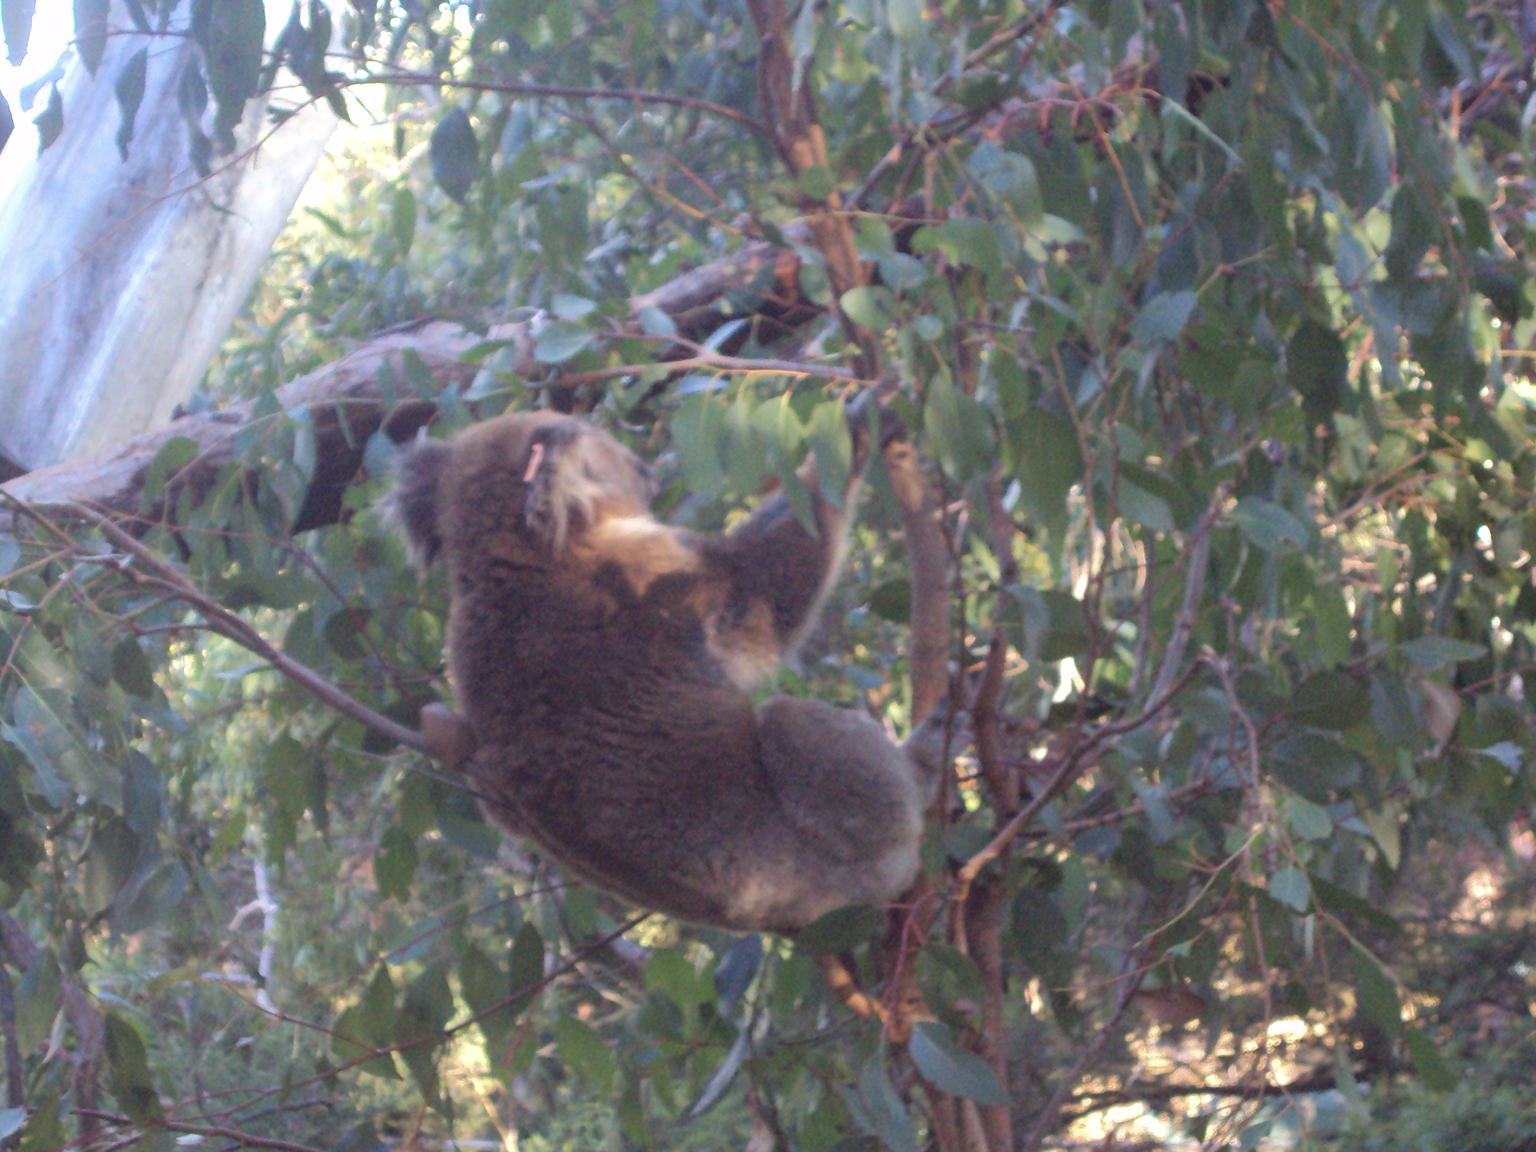 the koalas